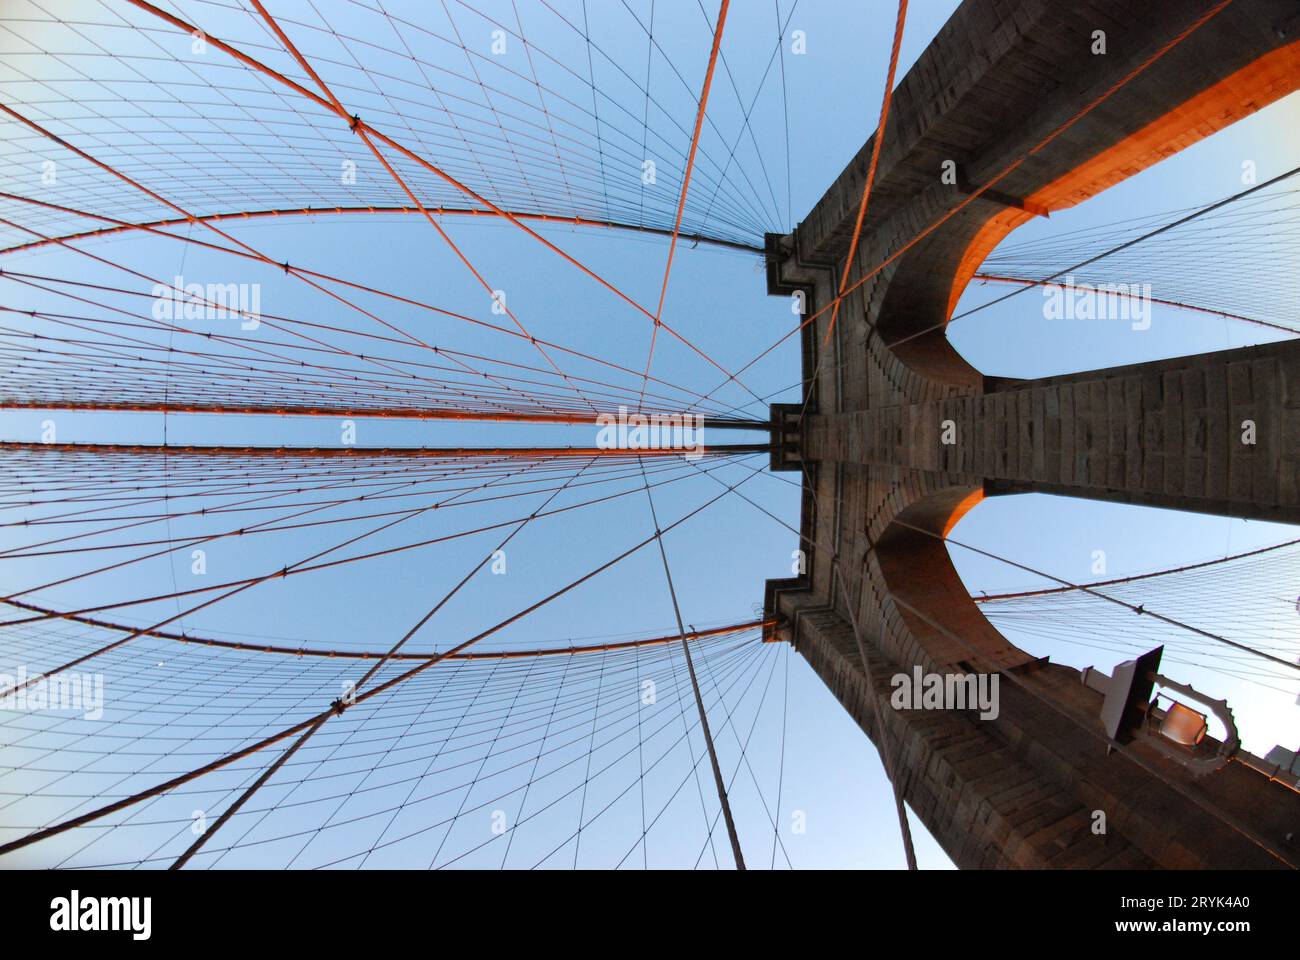 Faible angle des câbles du pont de Brooklyn contre un ciel bleu à New York Banque D'Images